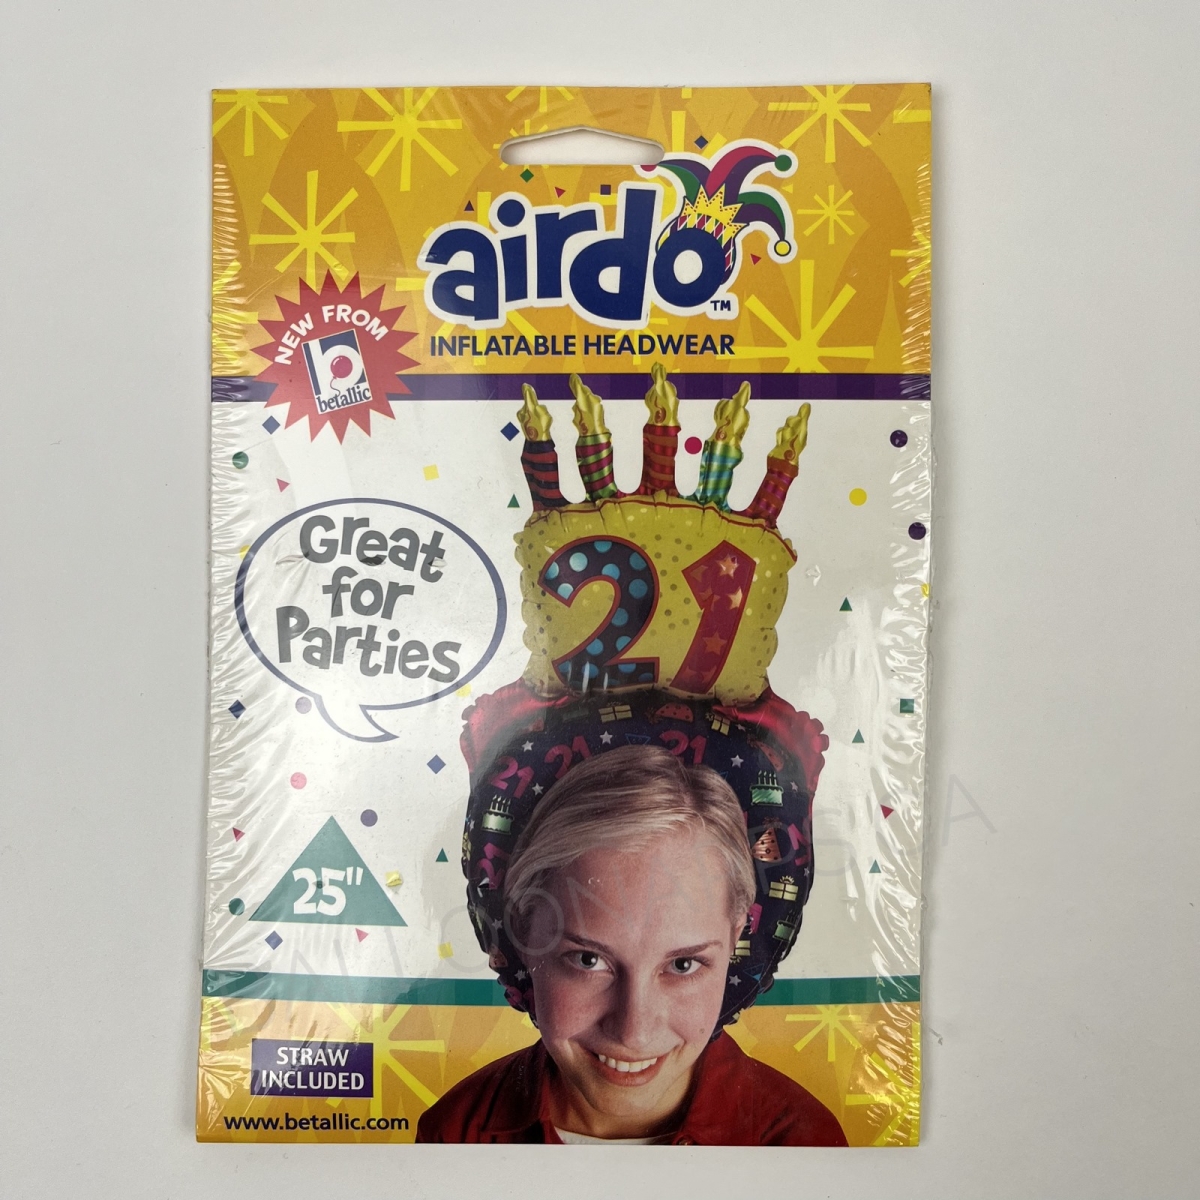 (1) Airdoo - 21st Birthday